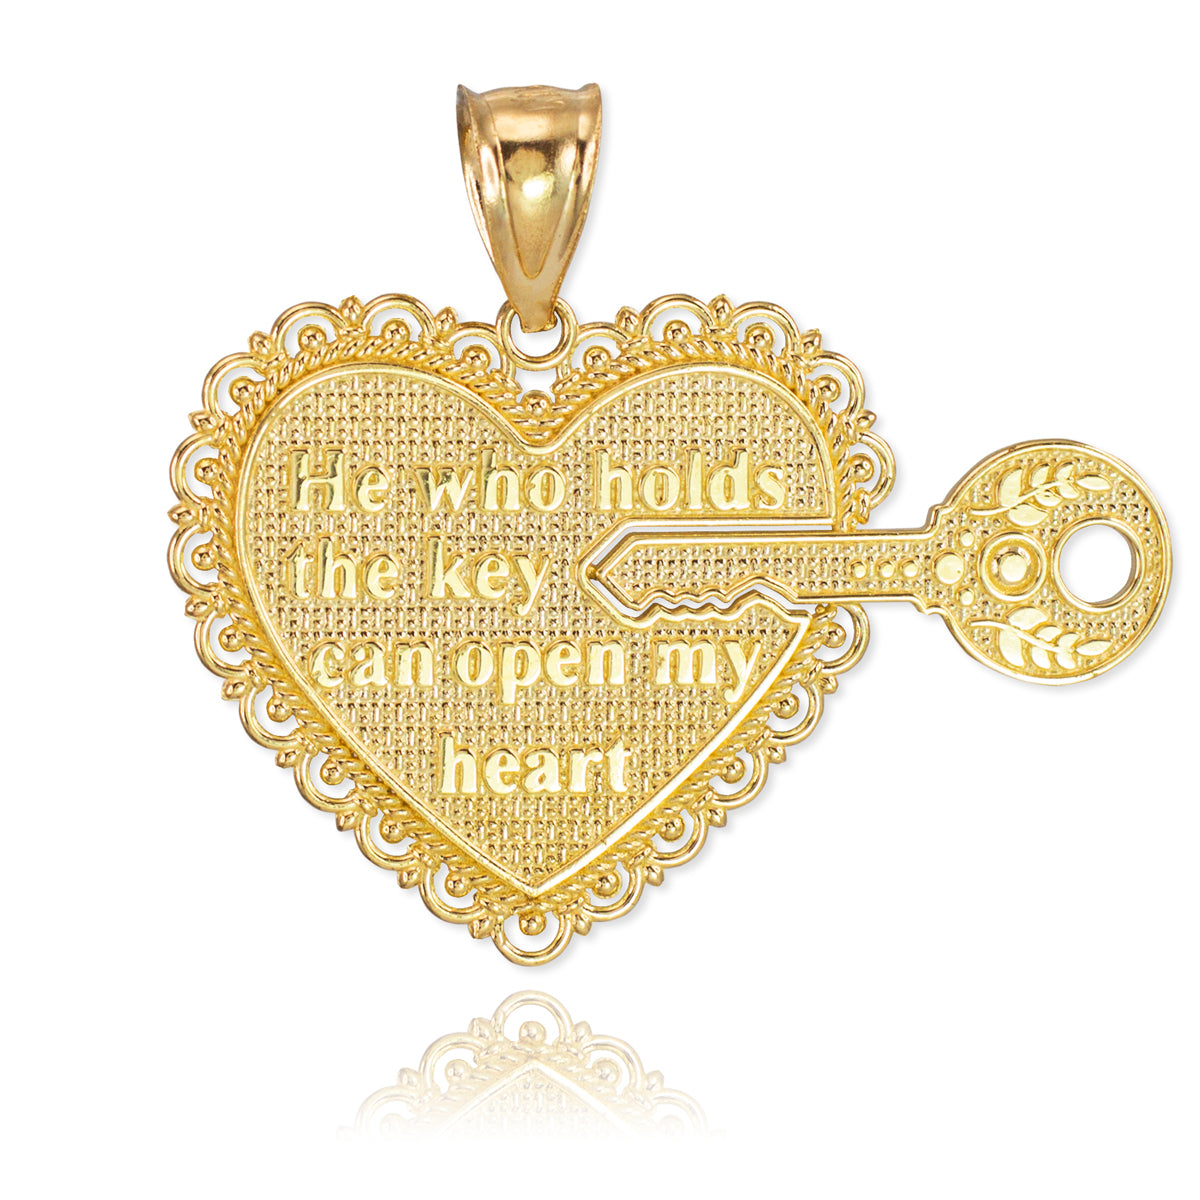 2pc Gold "Key of my Heart" Detachable Pendant Karma Blingz